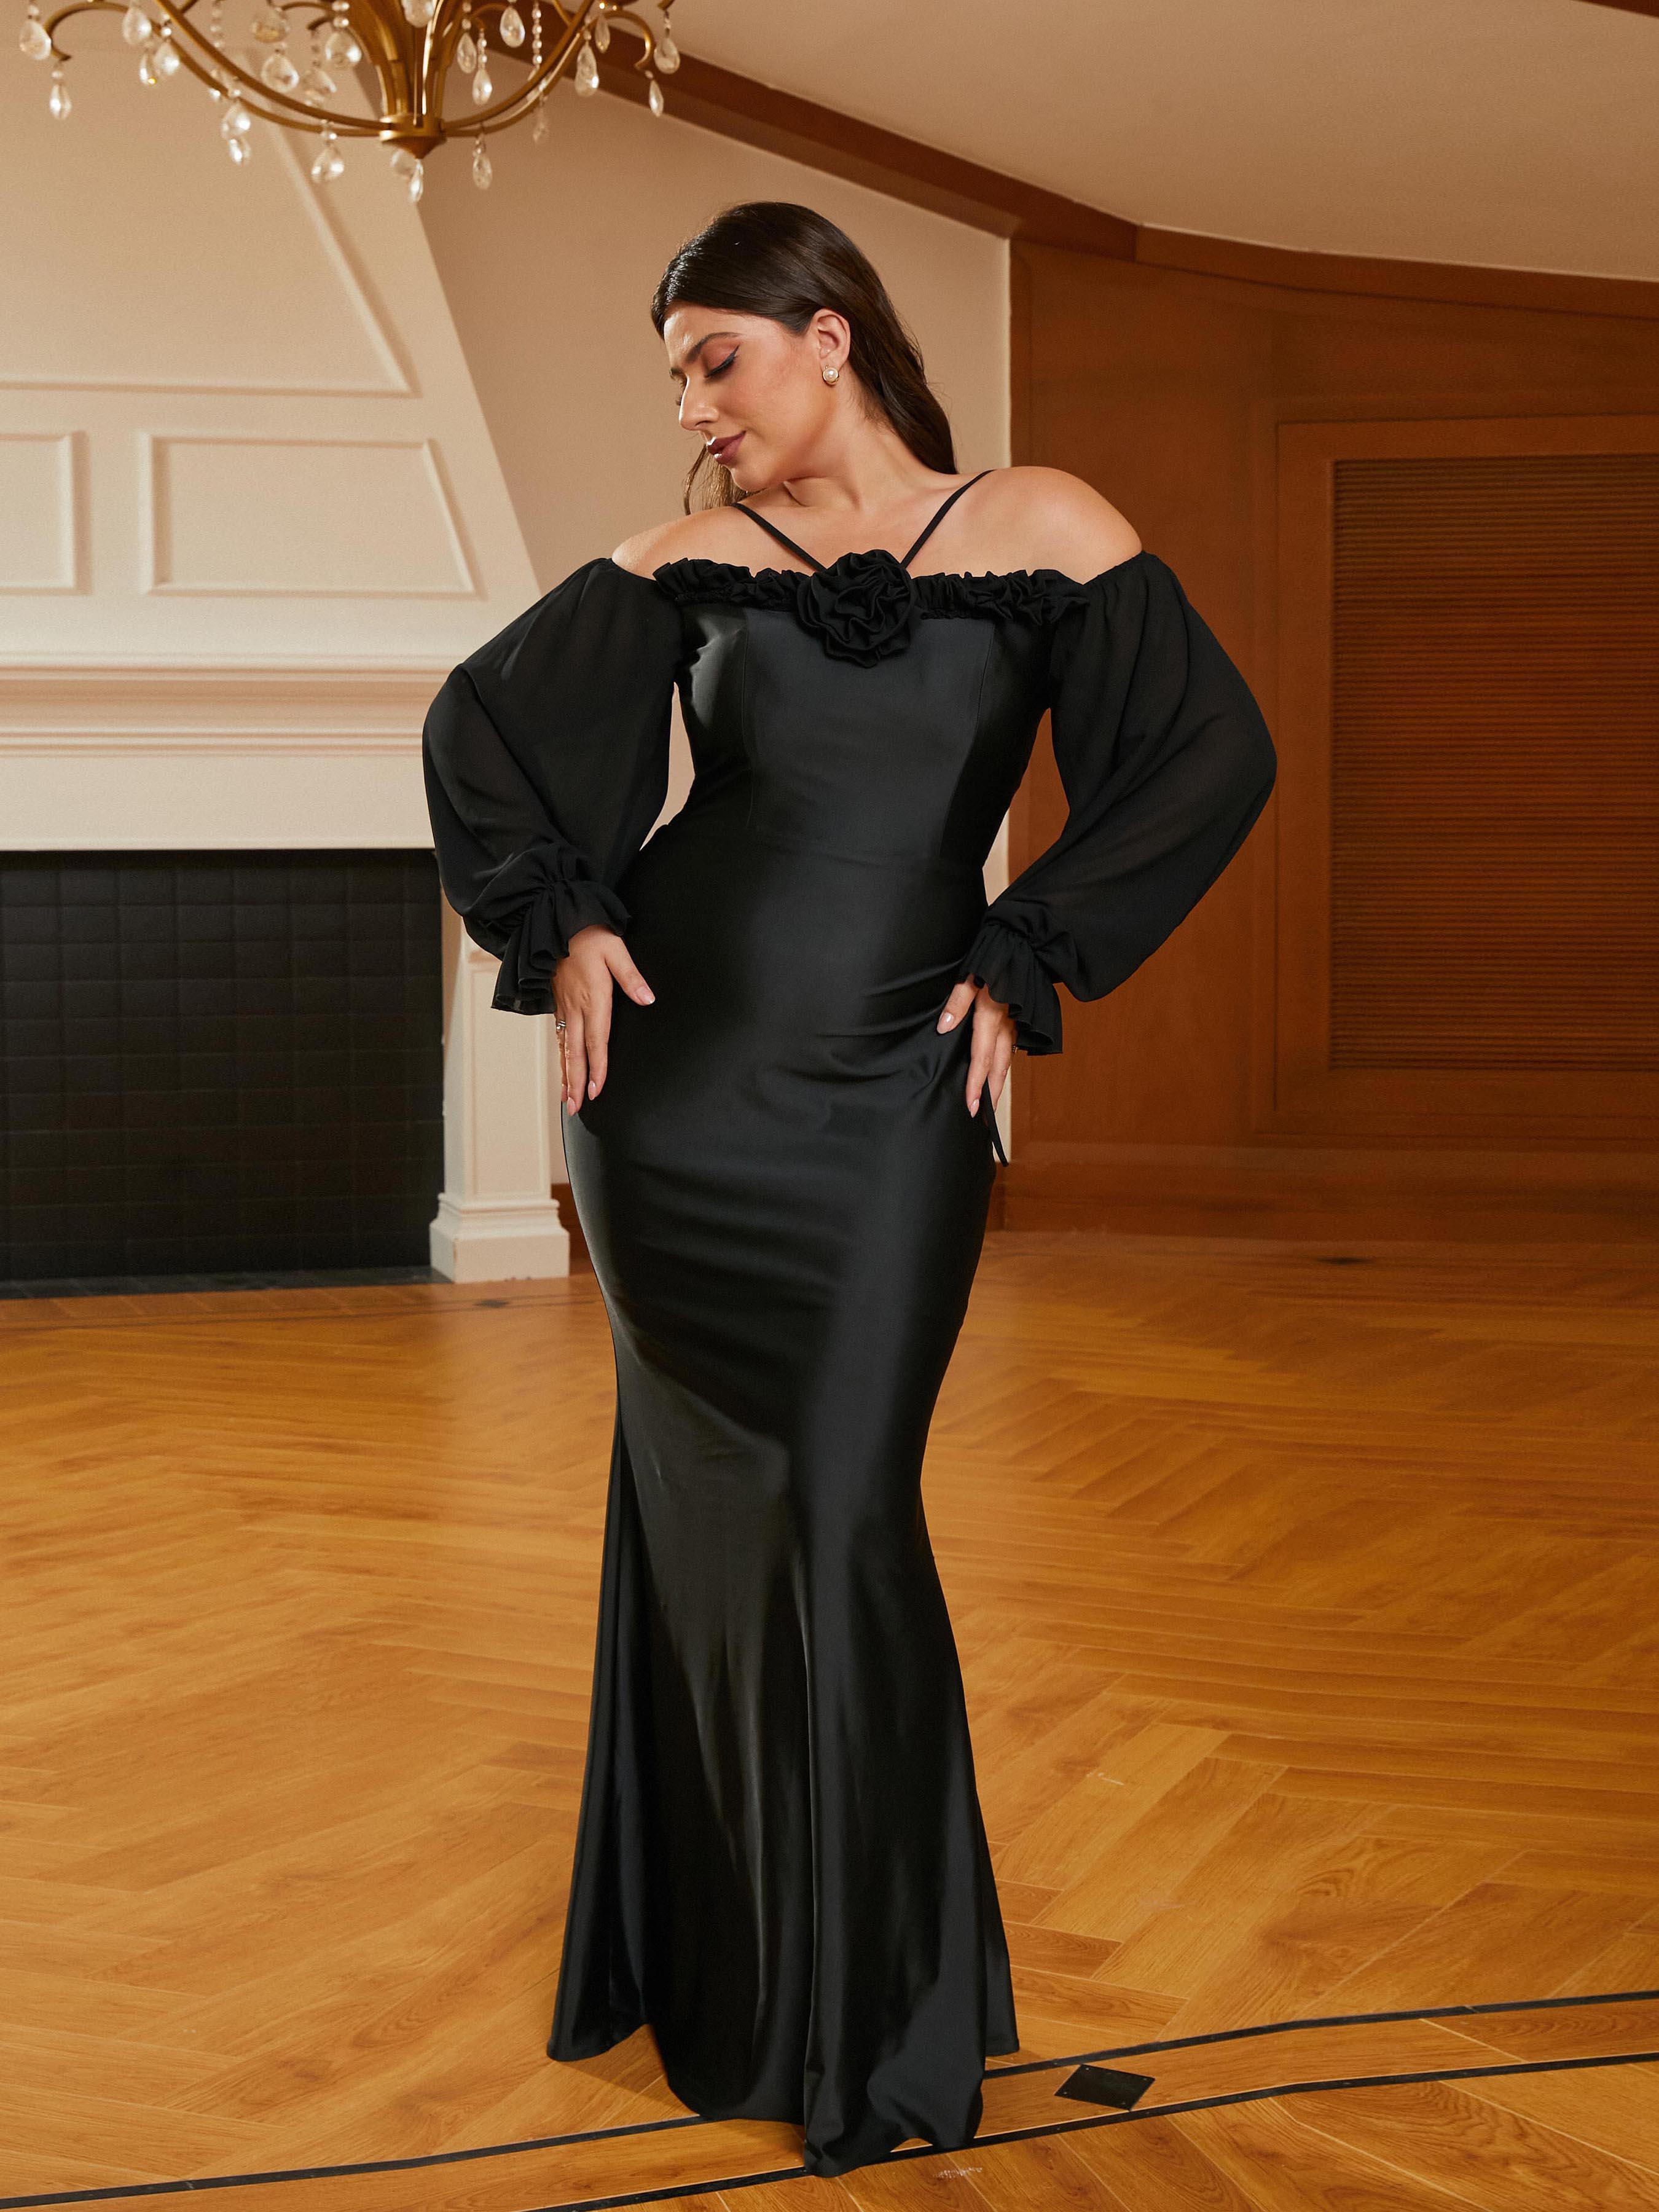 MISSORD Plus Size Halter Appliqued Panel Black Prom Dress